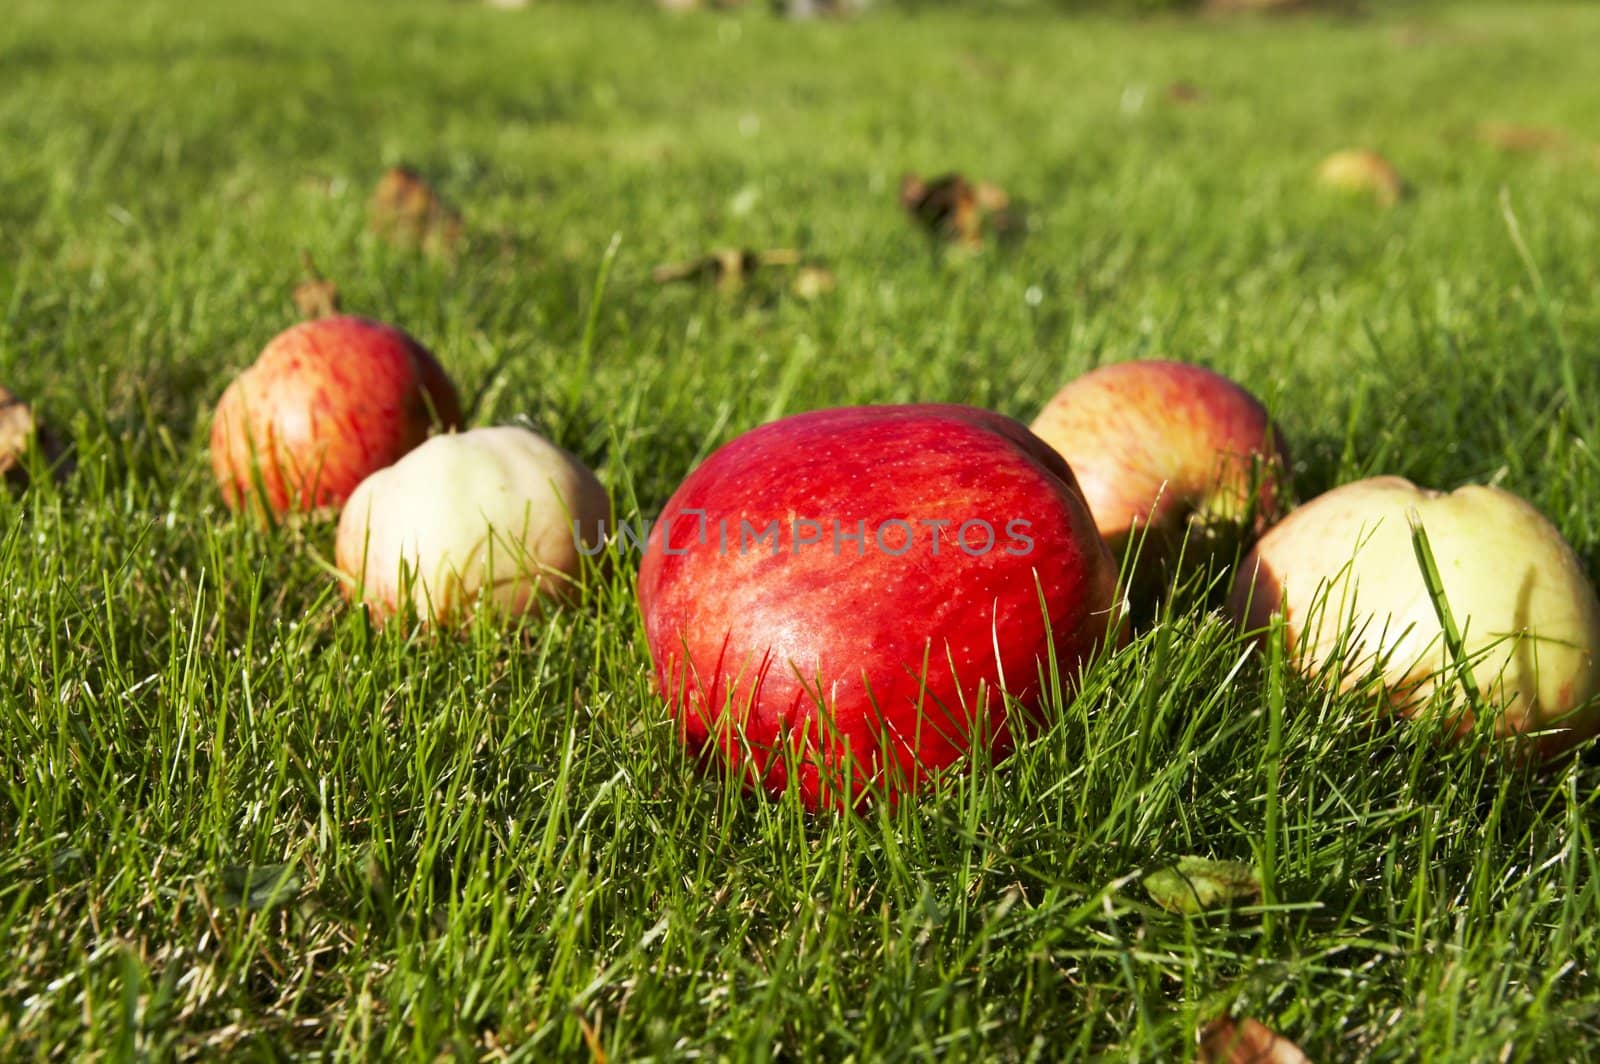 Apple on grass by Nikonas